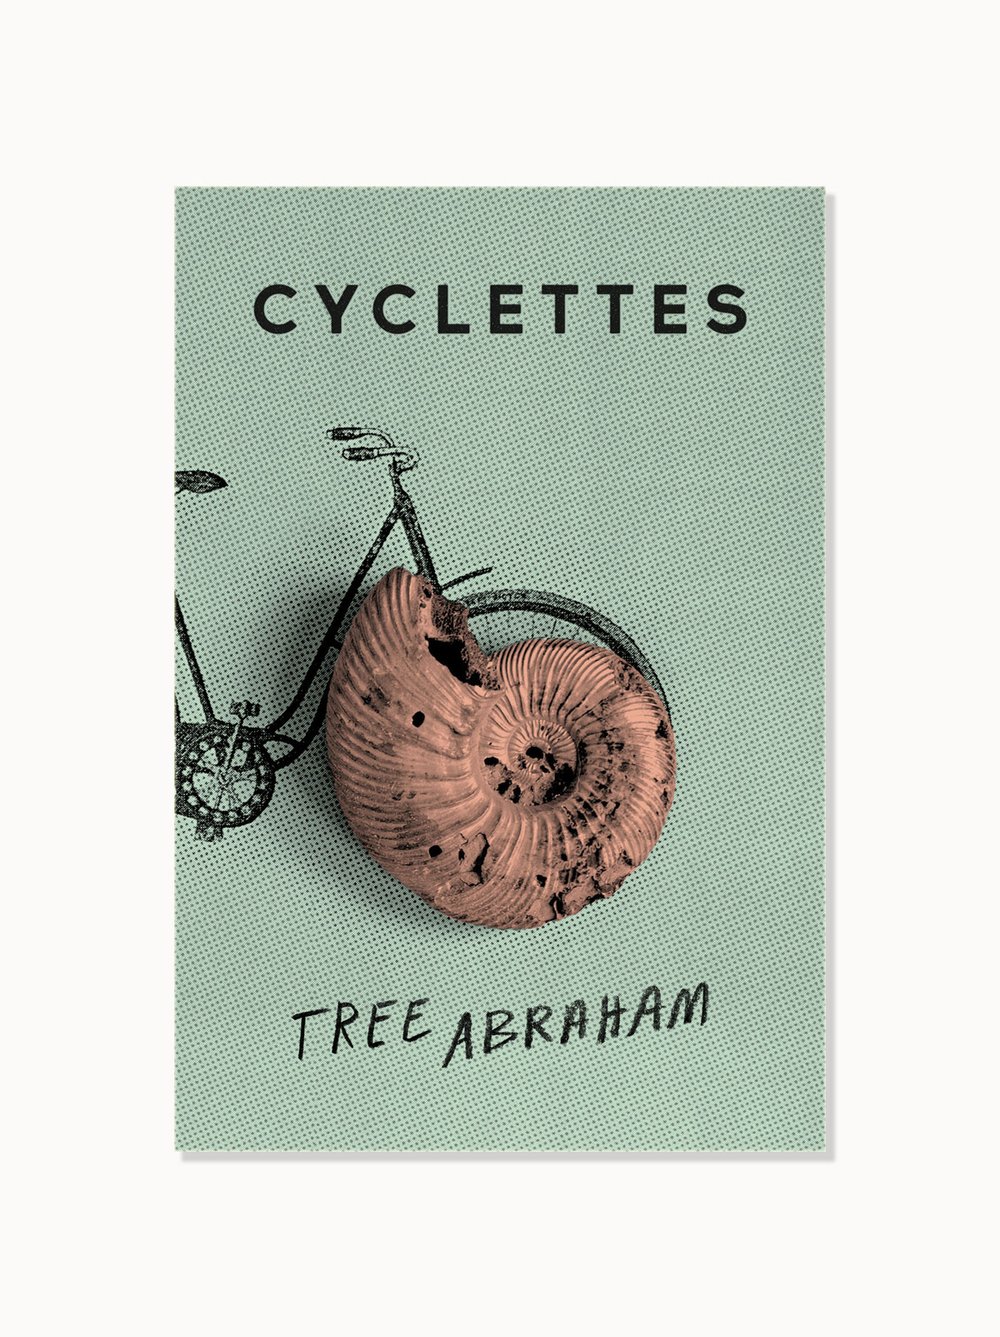 Design: Tree Abraham